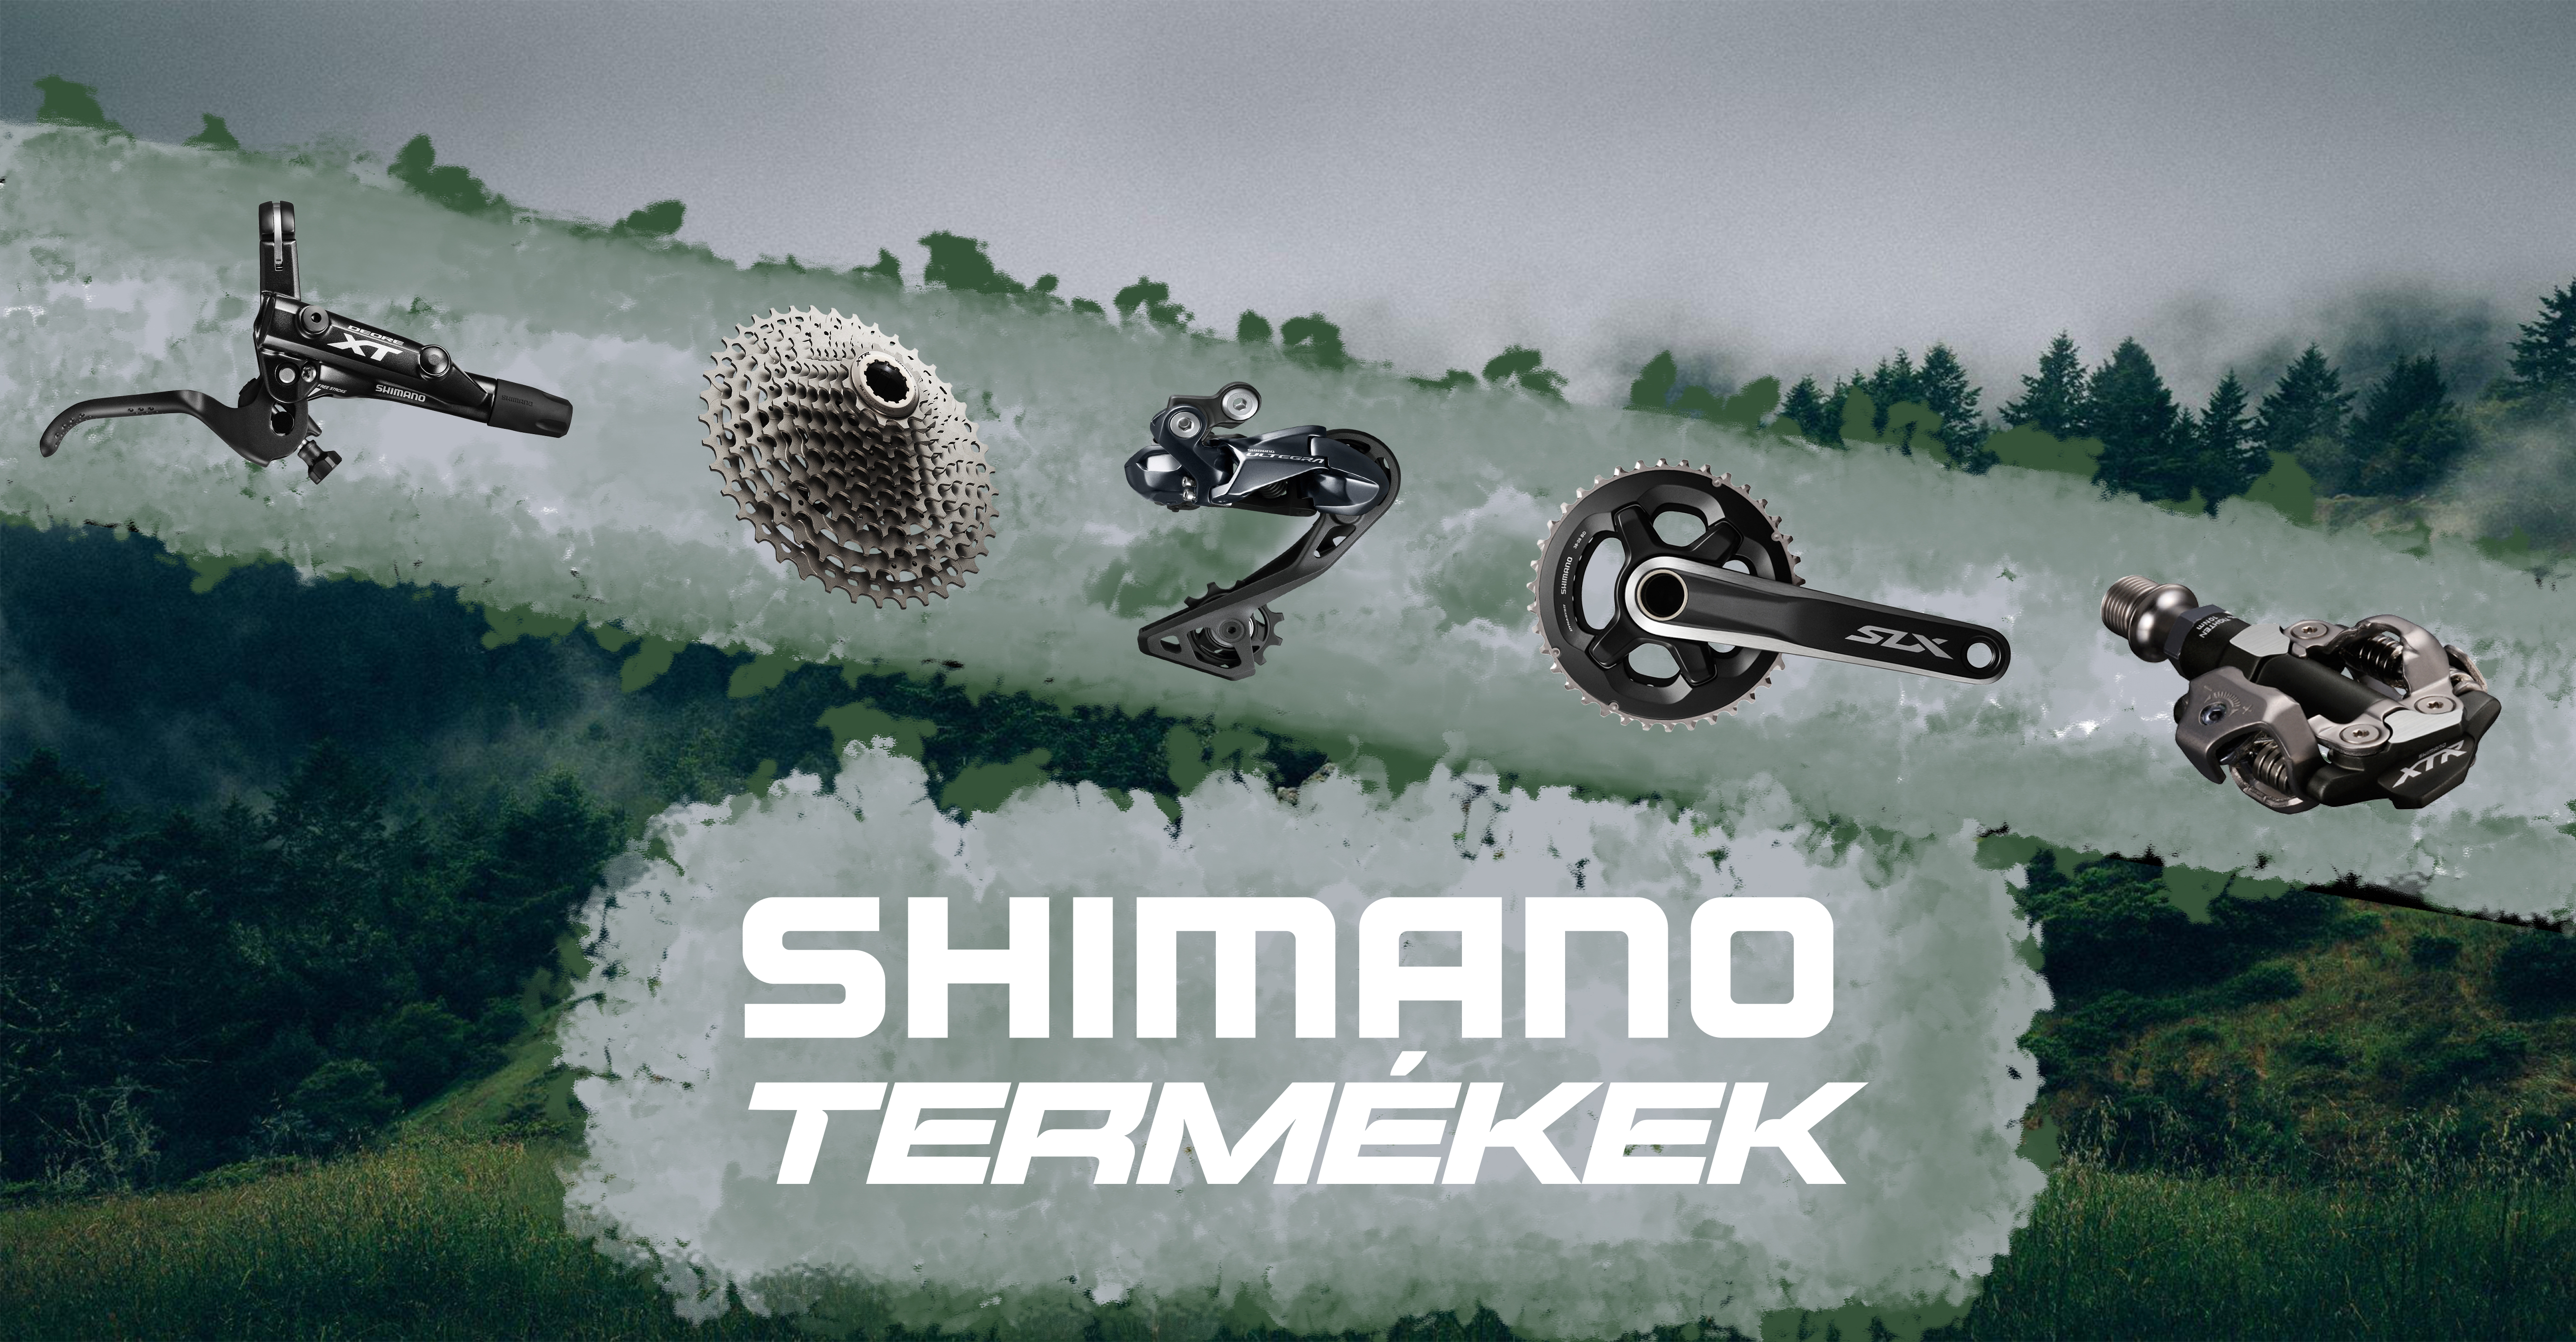 Shimano termékek